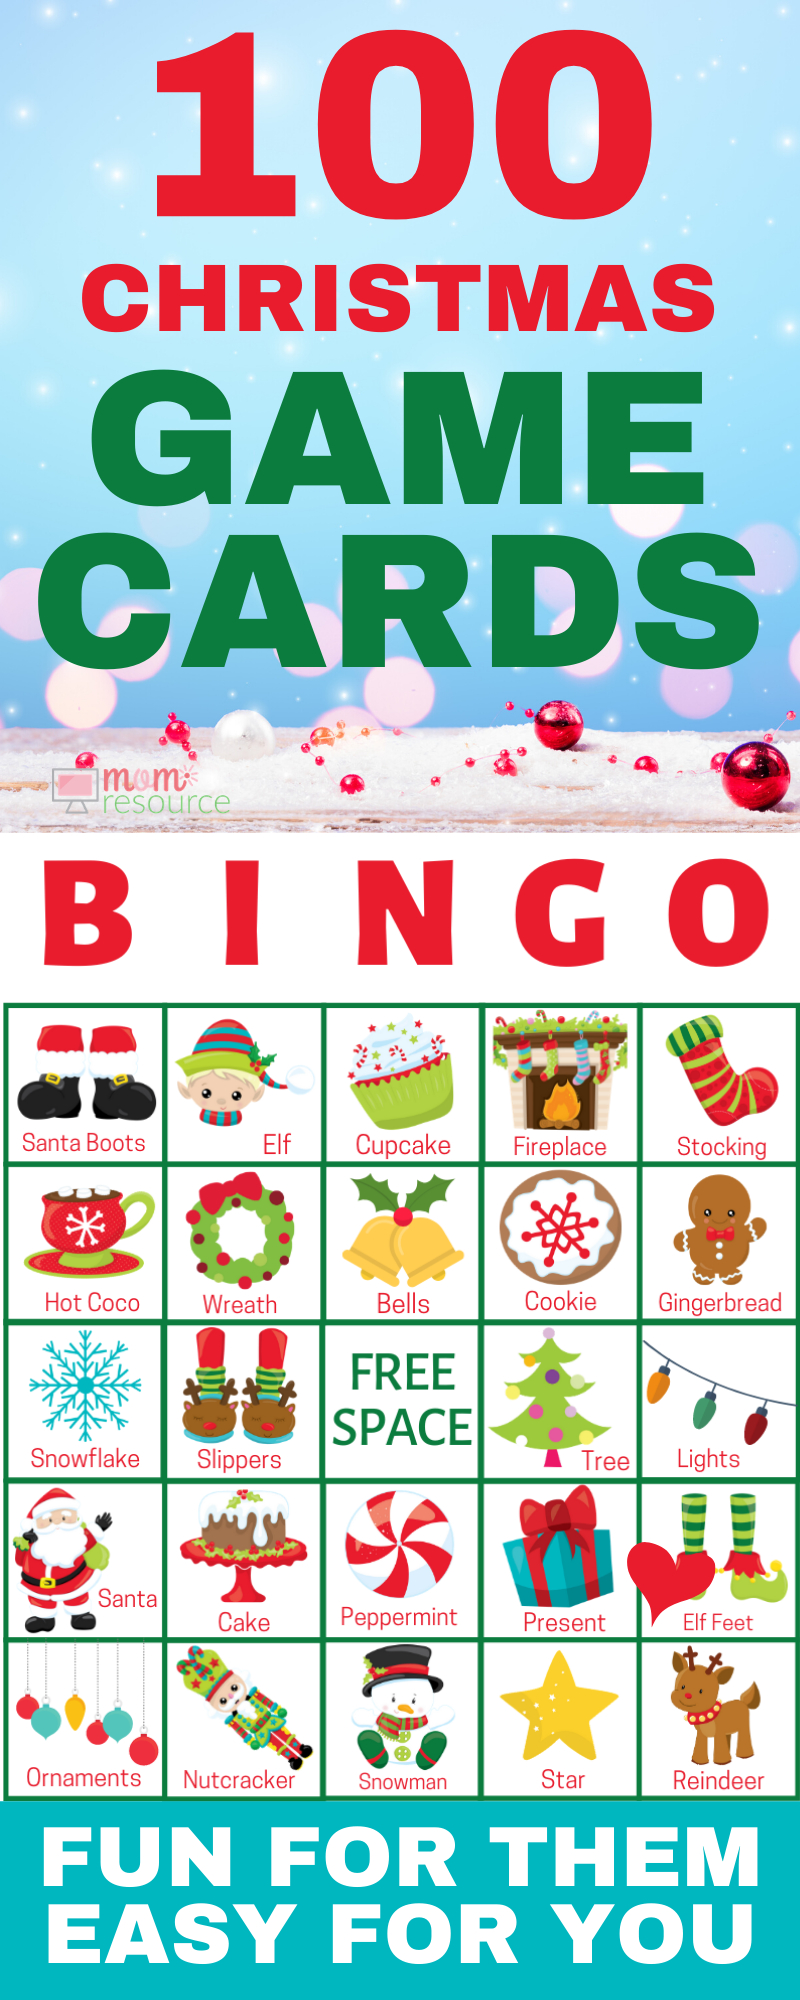 Printable Bingo Cards For Large Groups Printable Bingo Cards